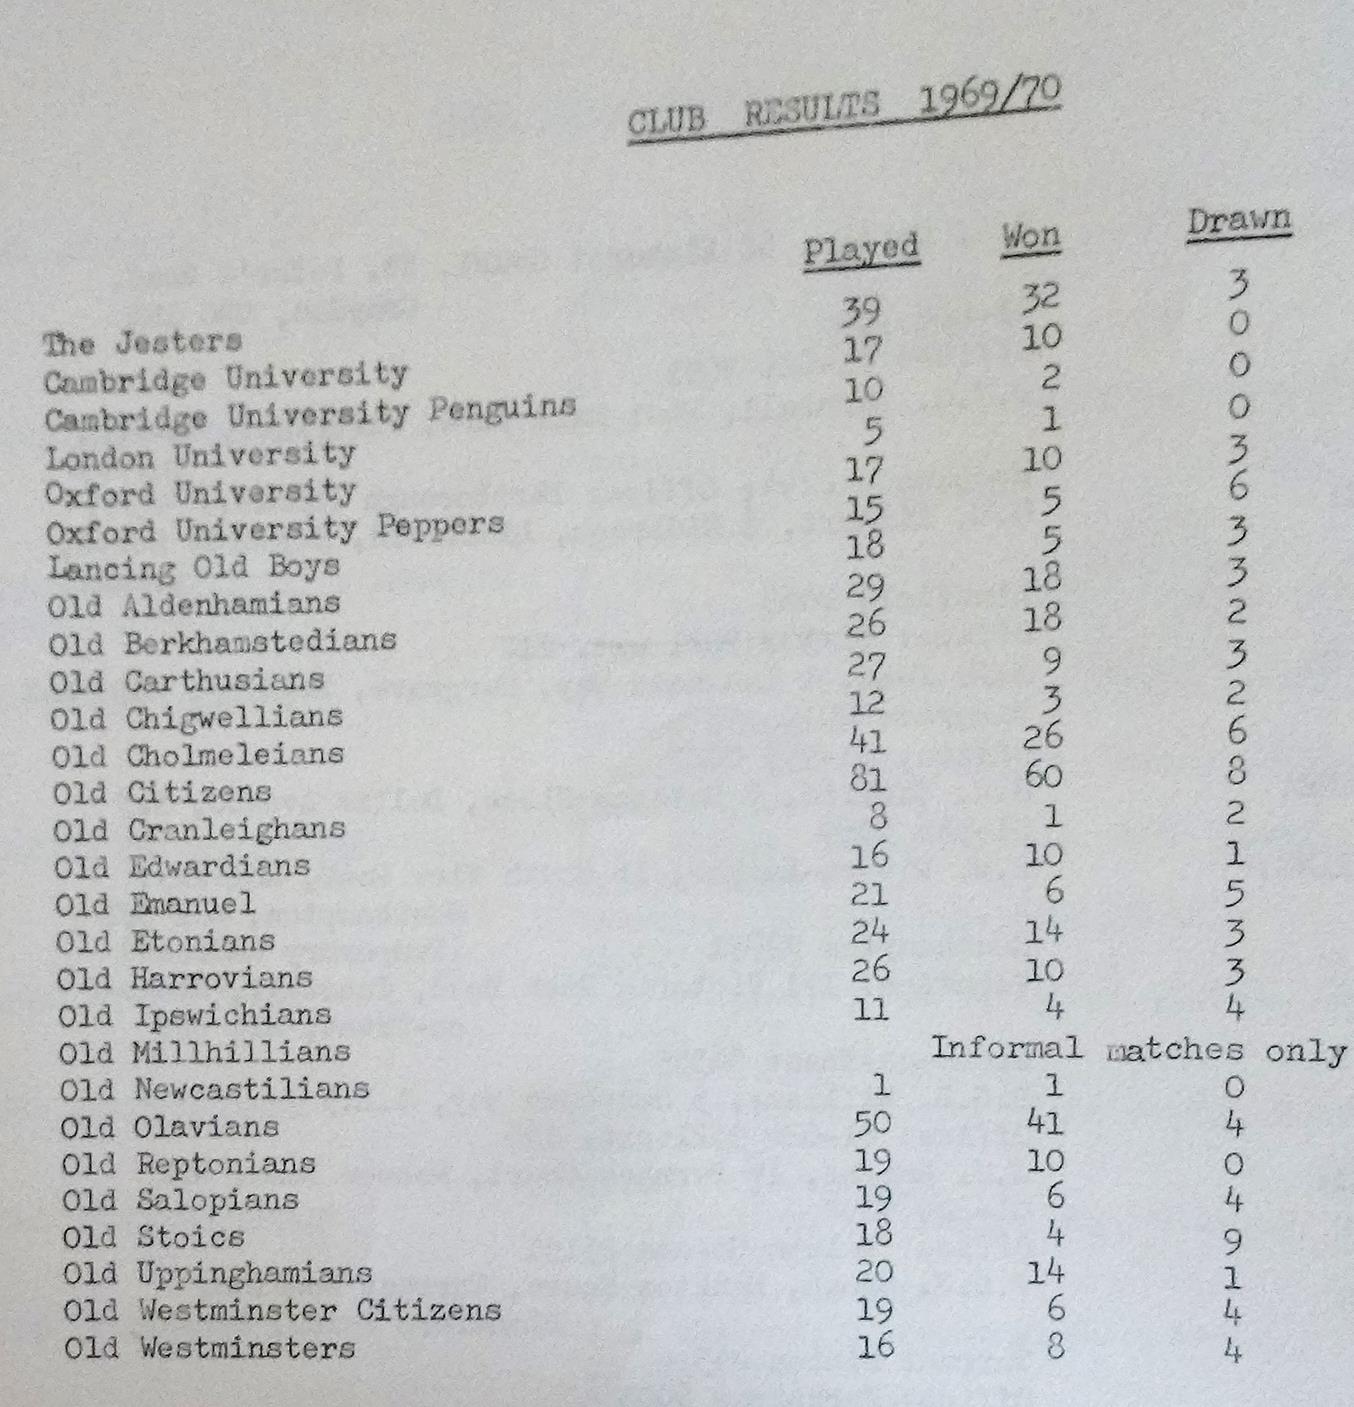 club results 1970